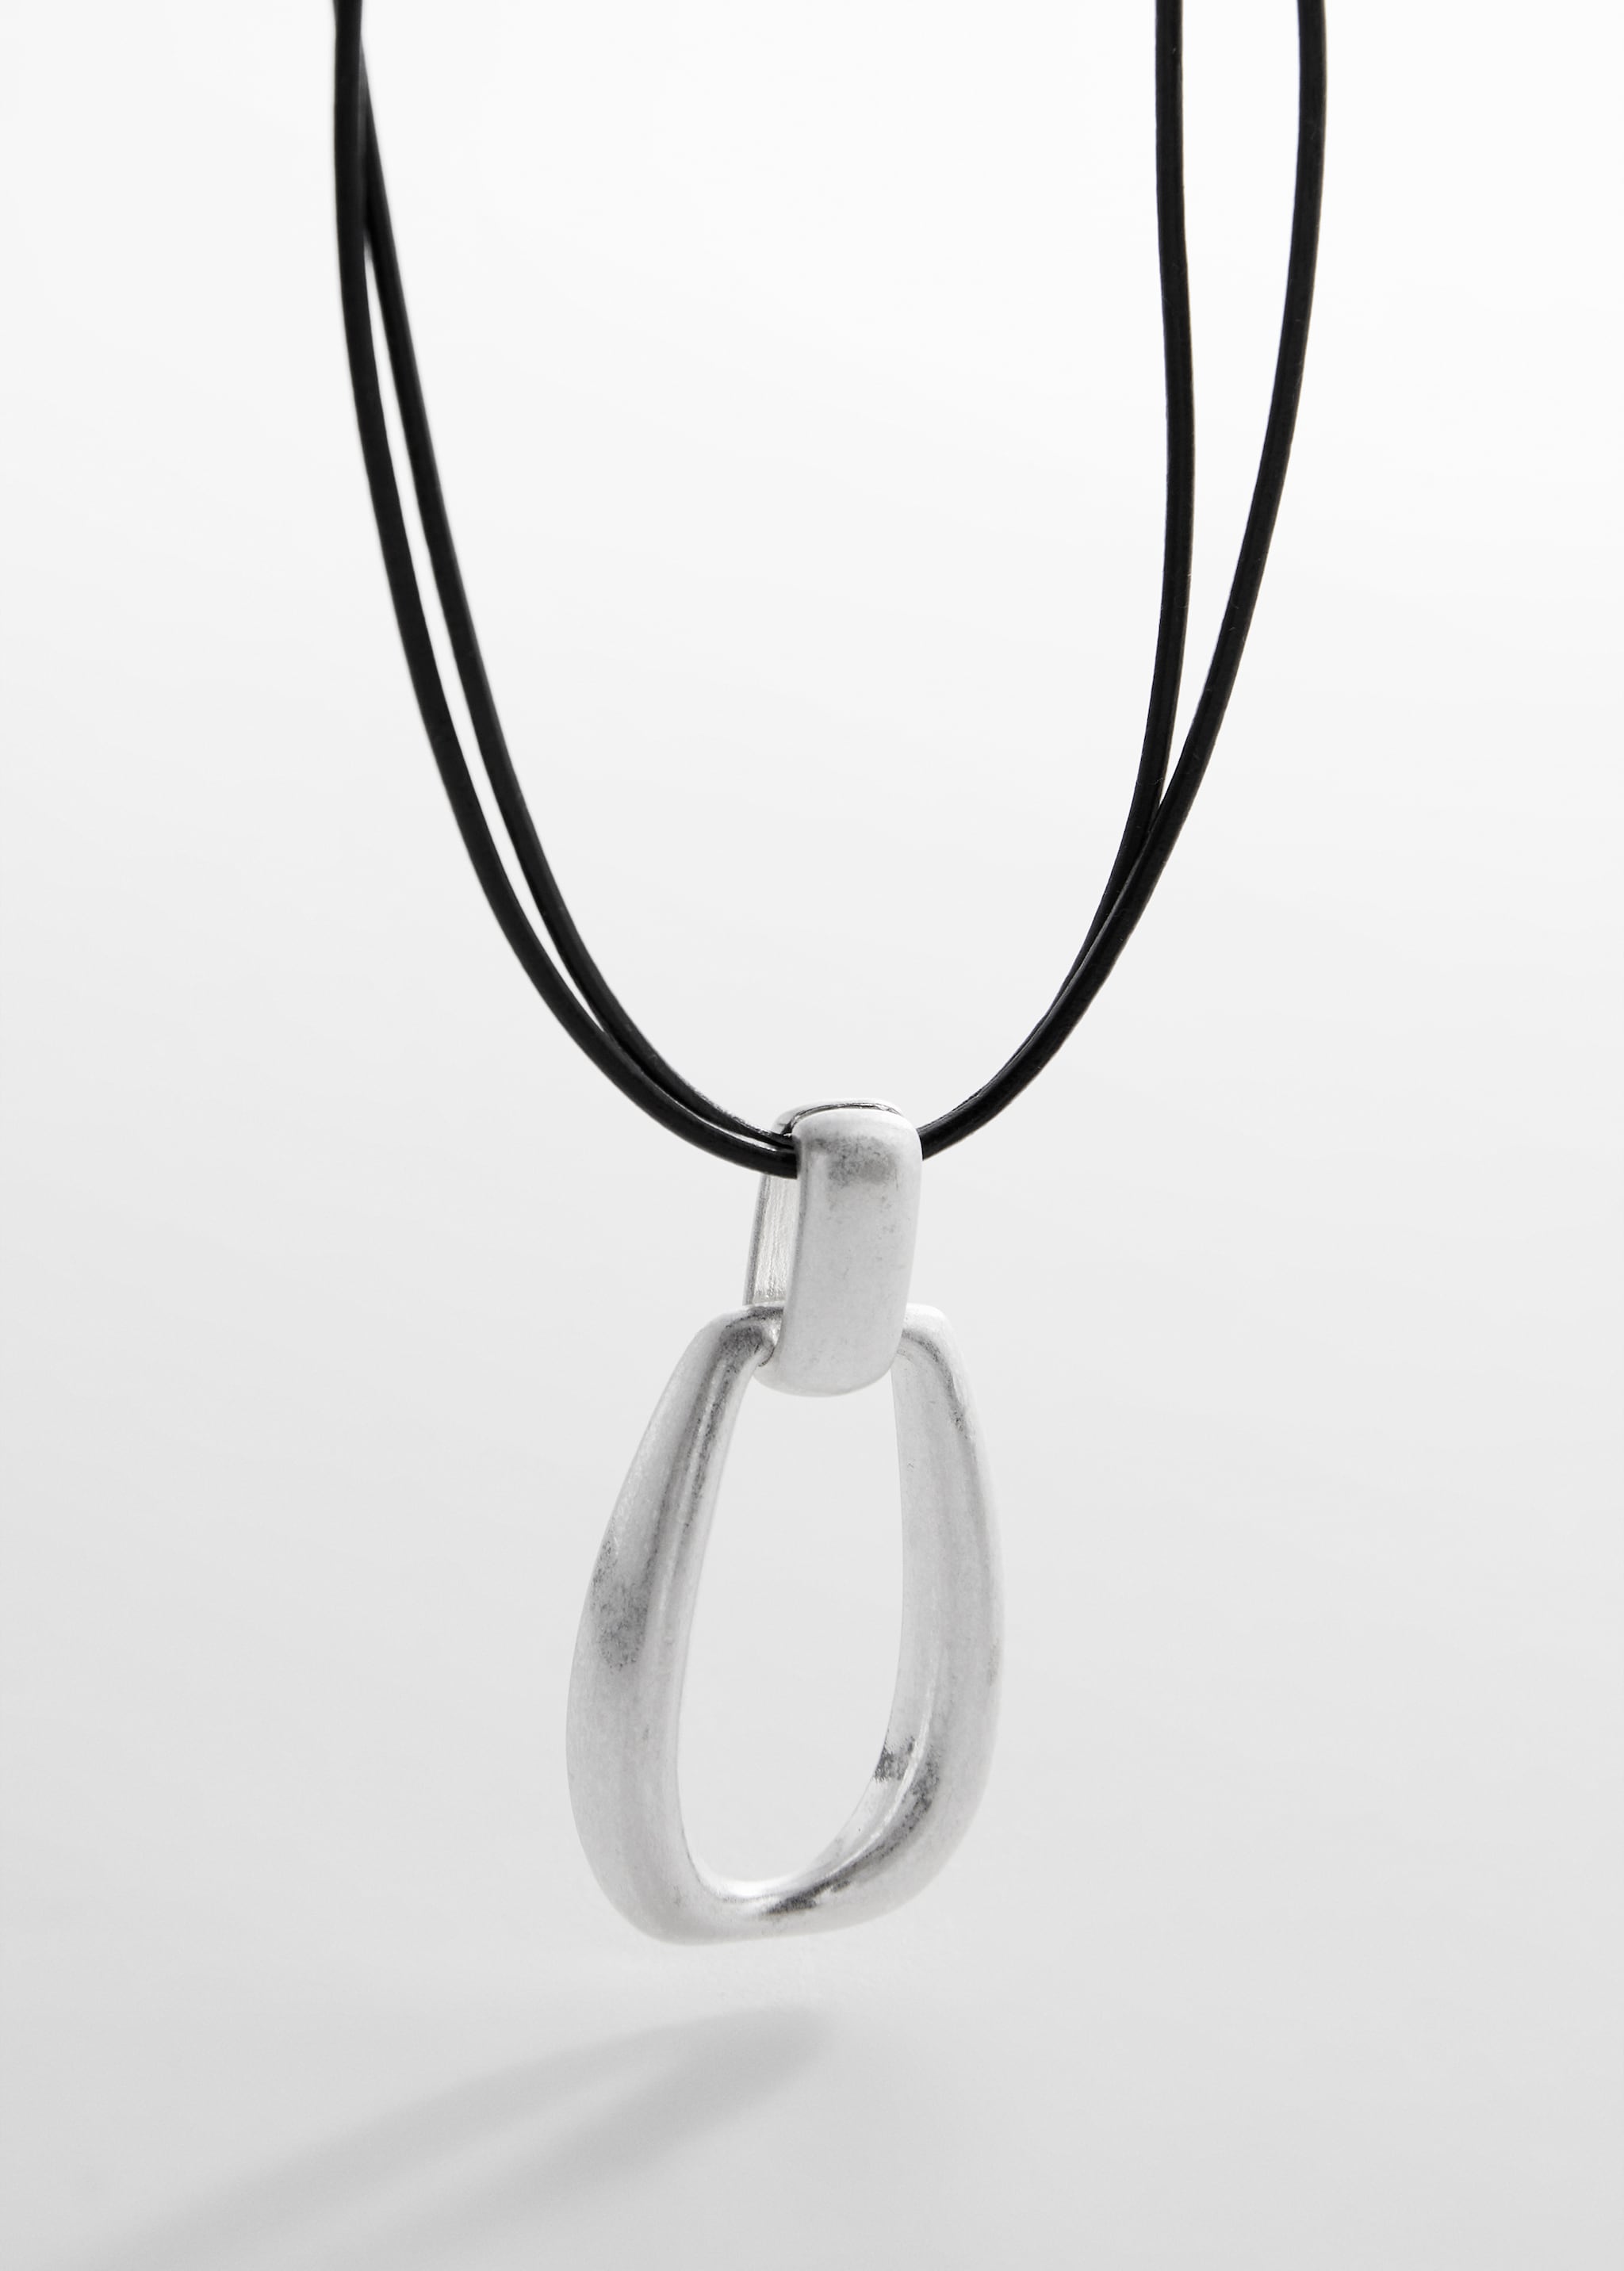 Metal pendant leather necklace - Medium plane